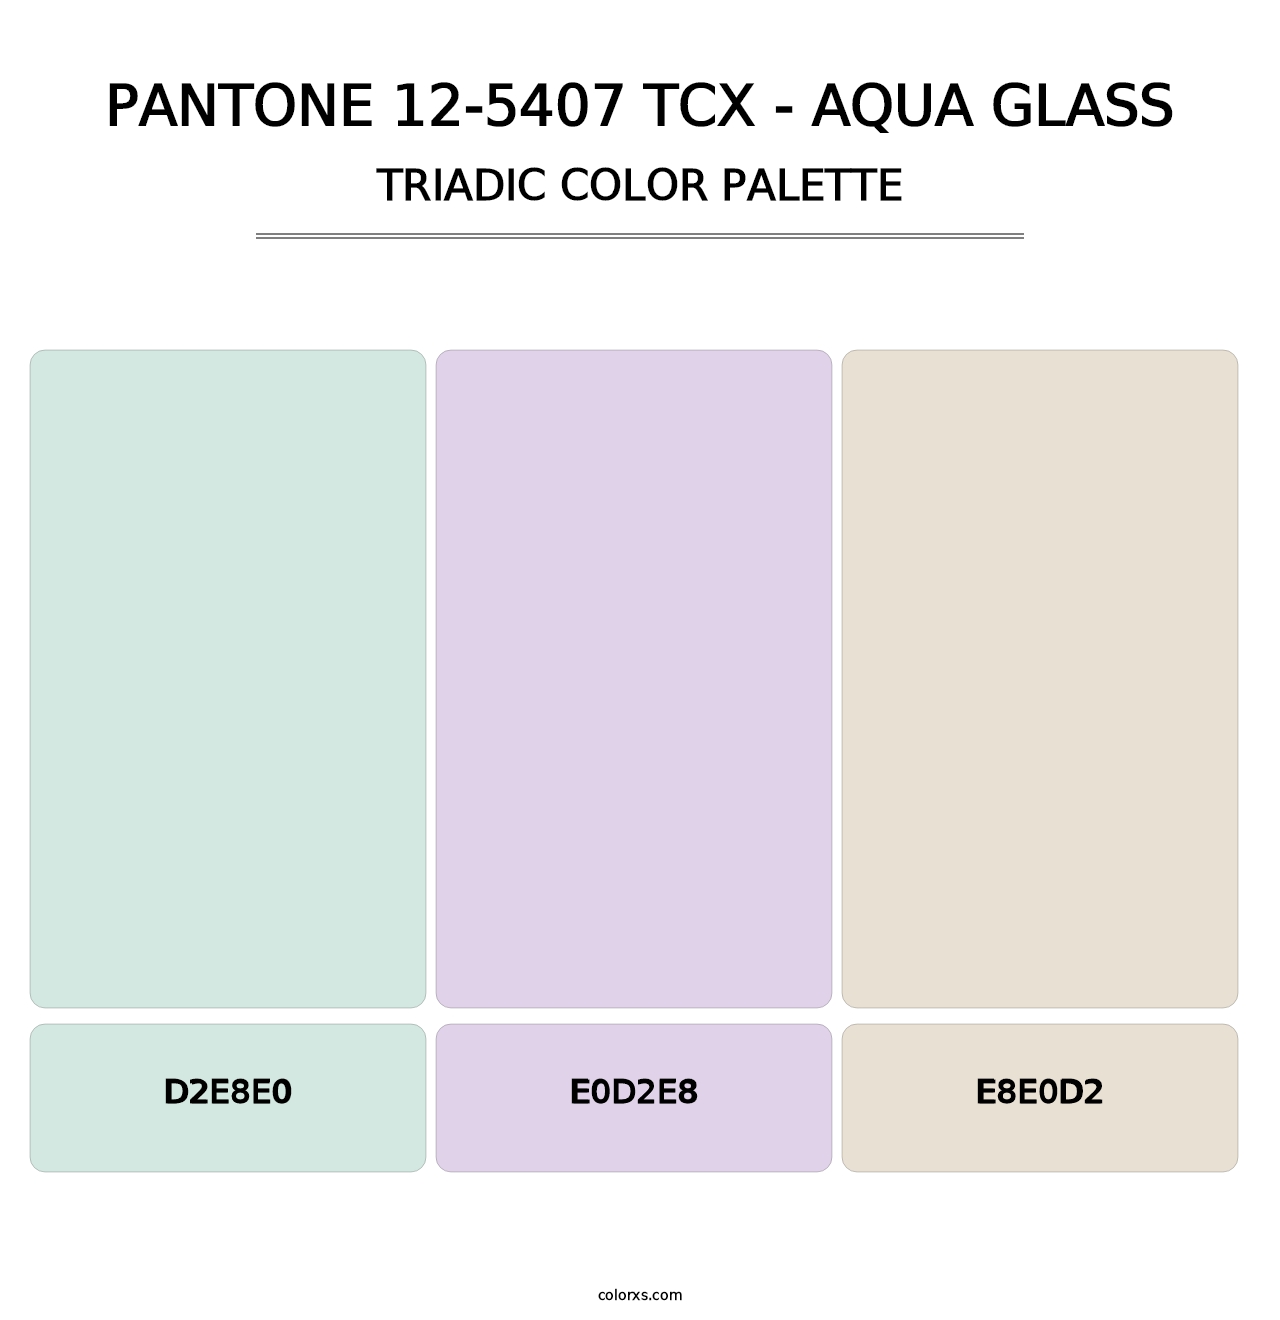 PANTONE 12-5407 TCX - Aqua Glass - Triadic Color Palette